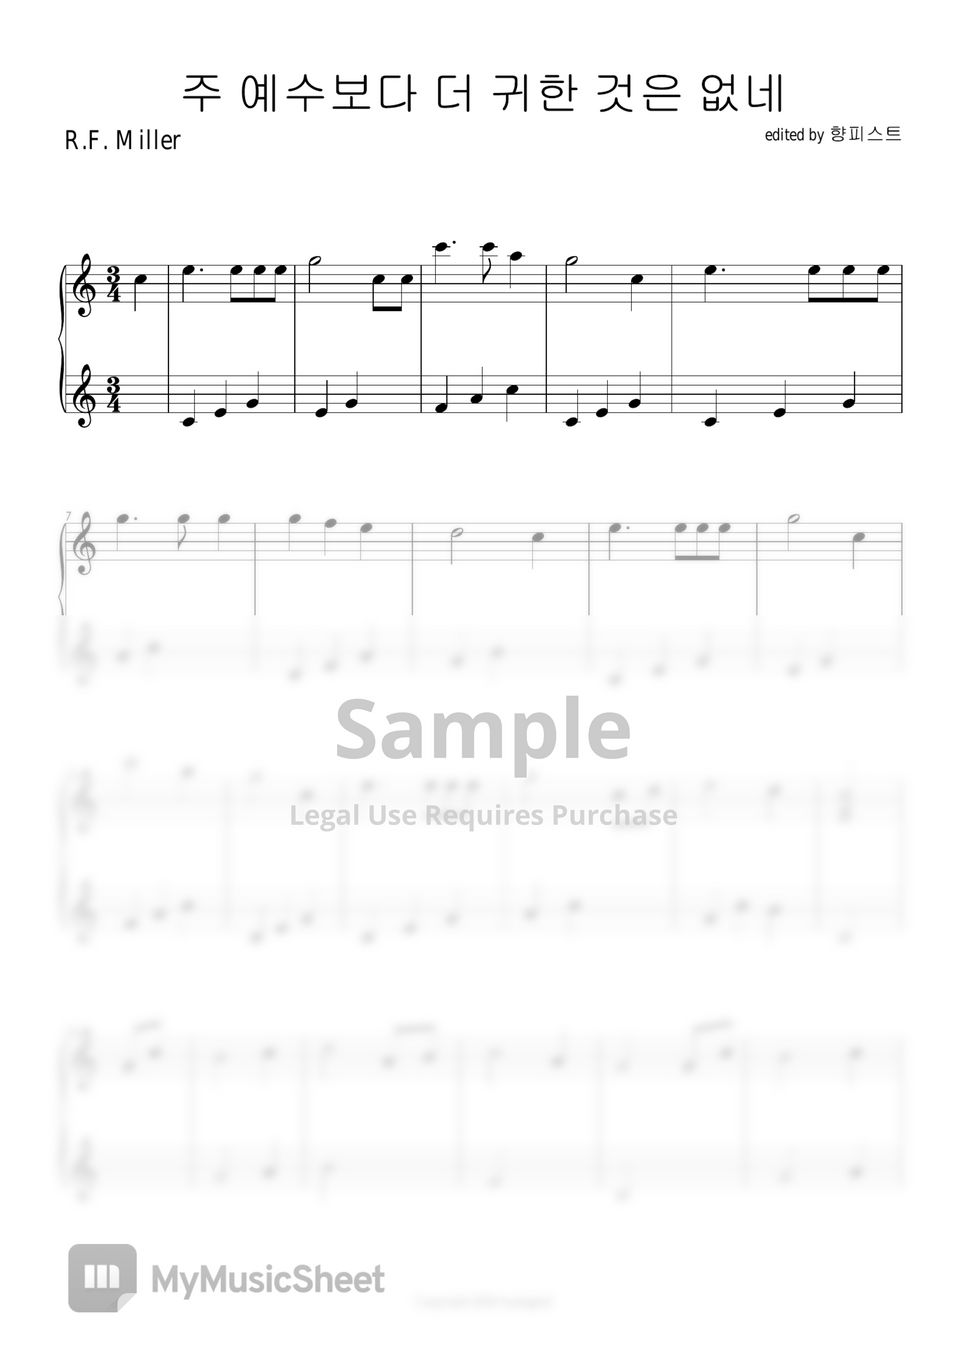 R.F. Miller - I'd Rather Have Jesus (mini harp music) by Hyangpist